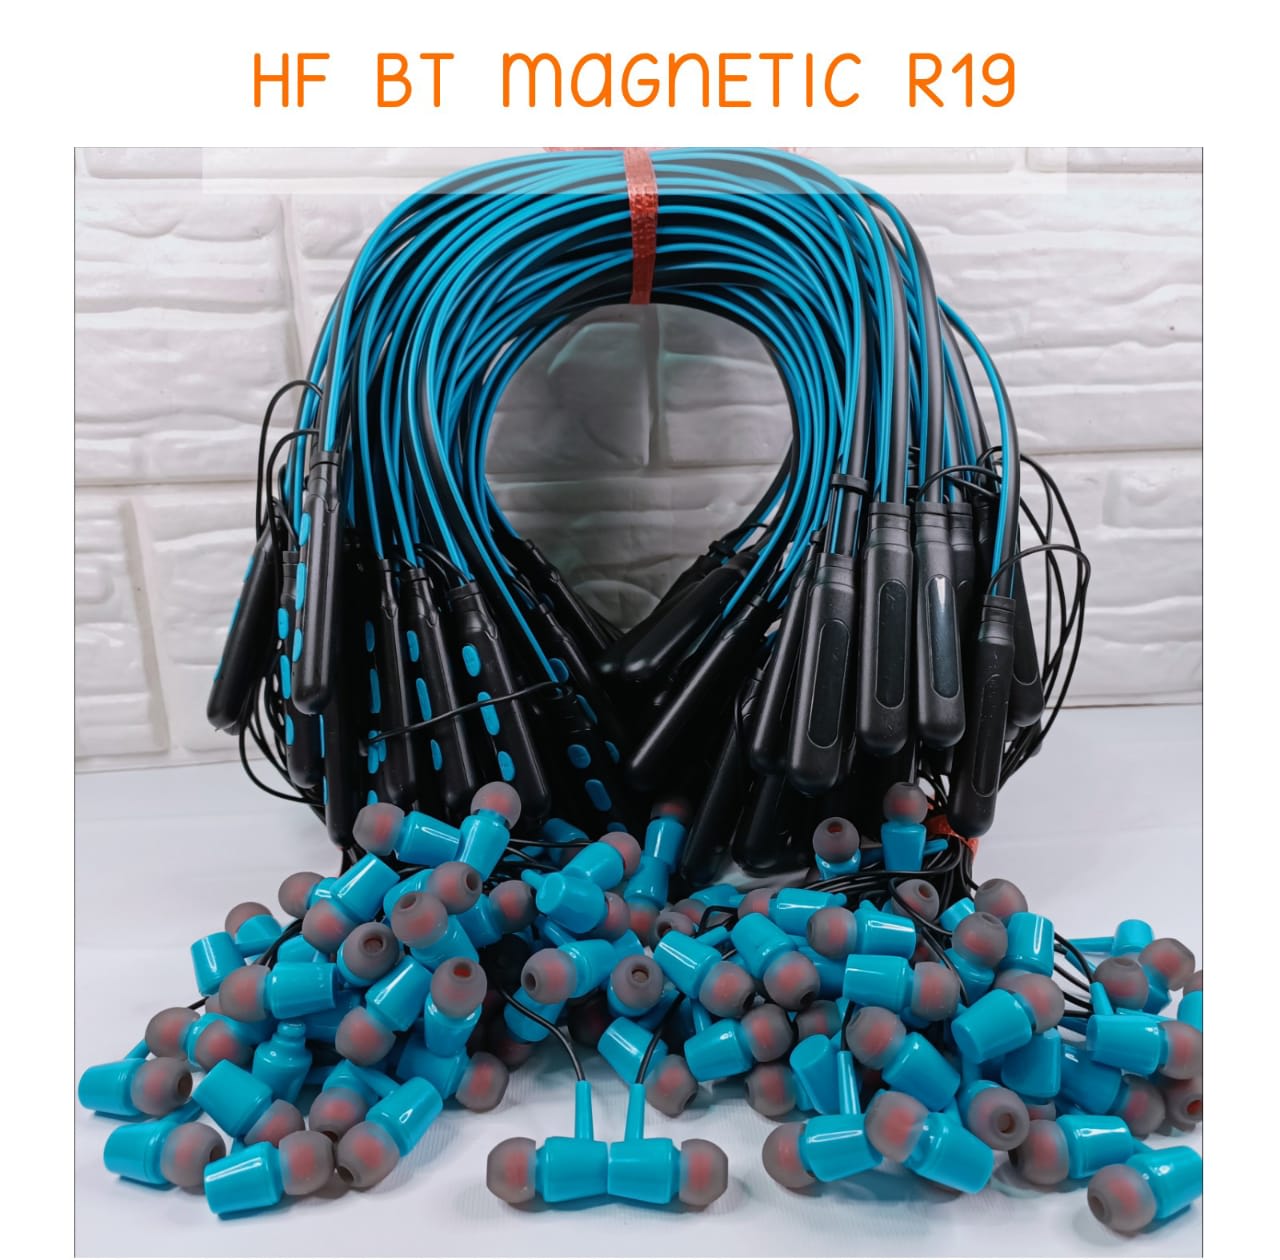 HANDSFREE BLUETOOH MAGNETIC R-19 - NON PACKING